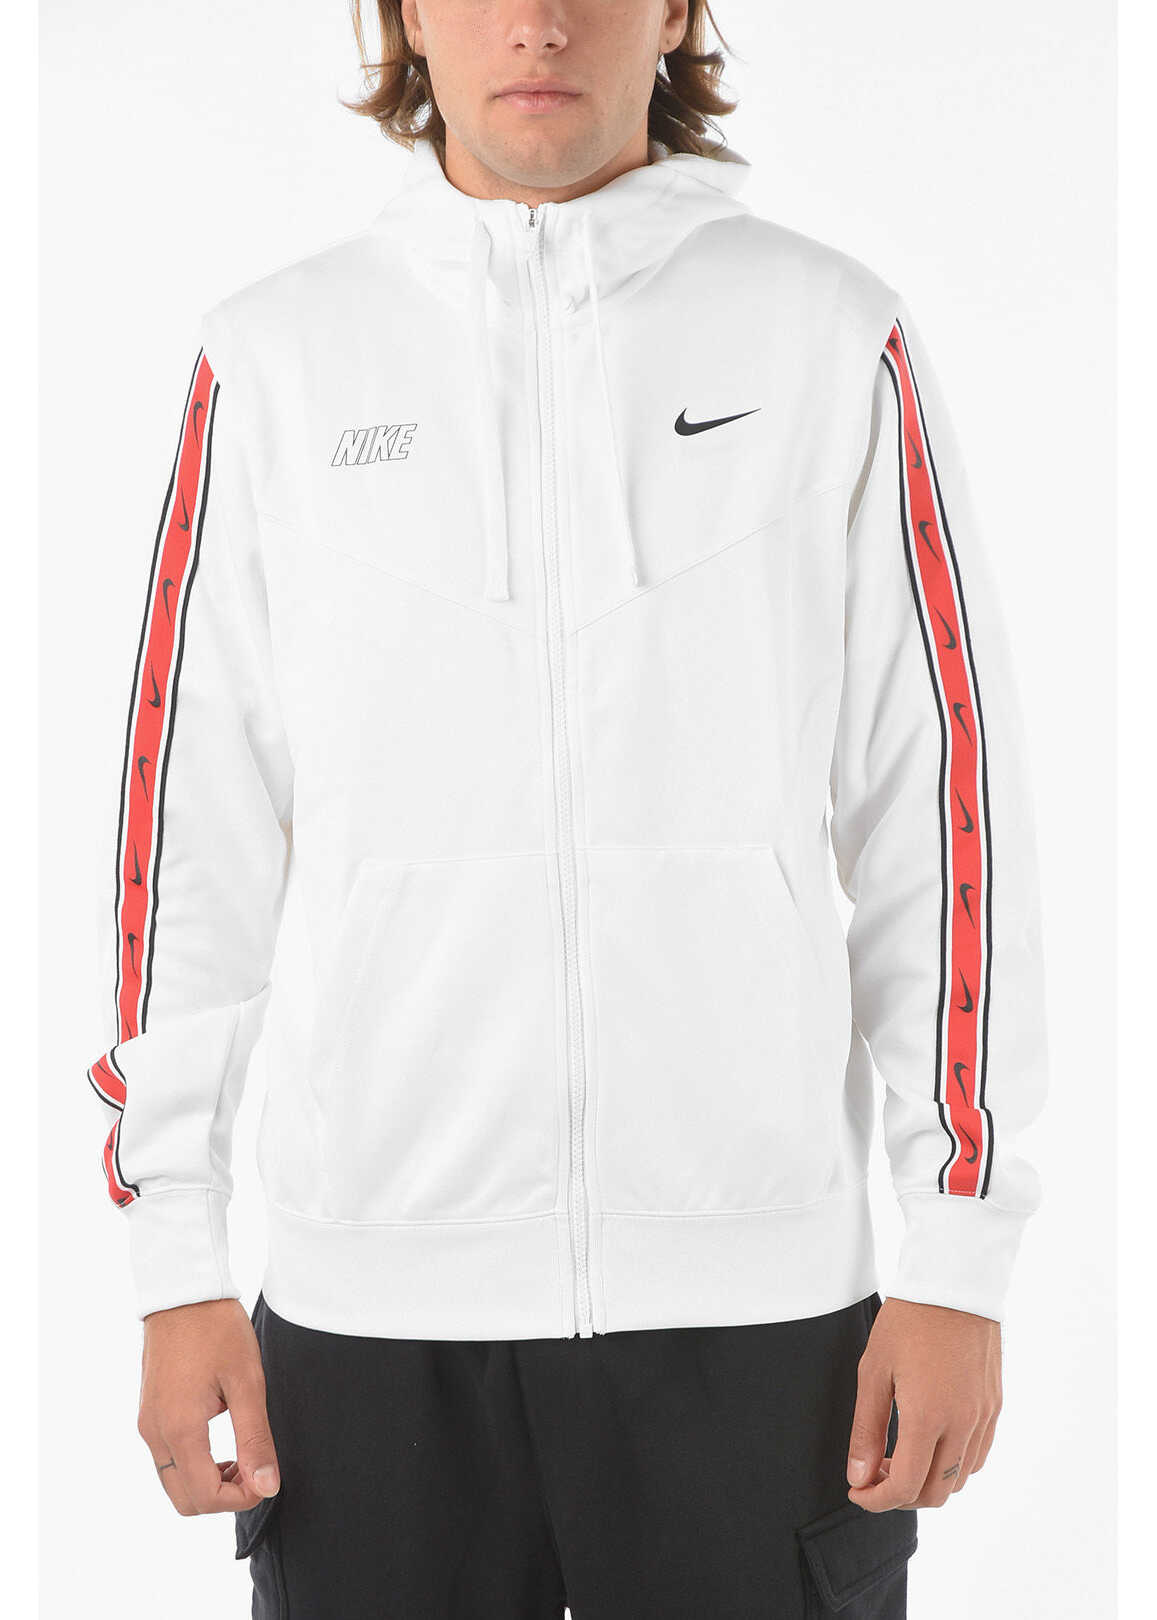 Nike Logoed Side Band 2 Pockets Sweatshirt White